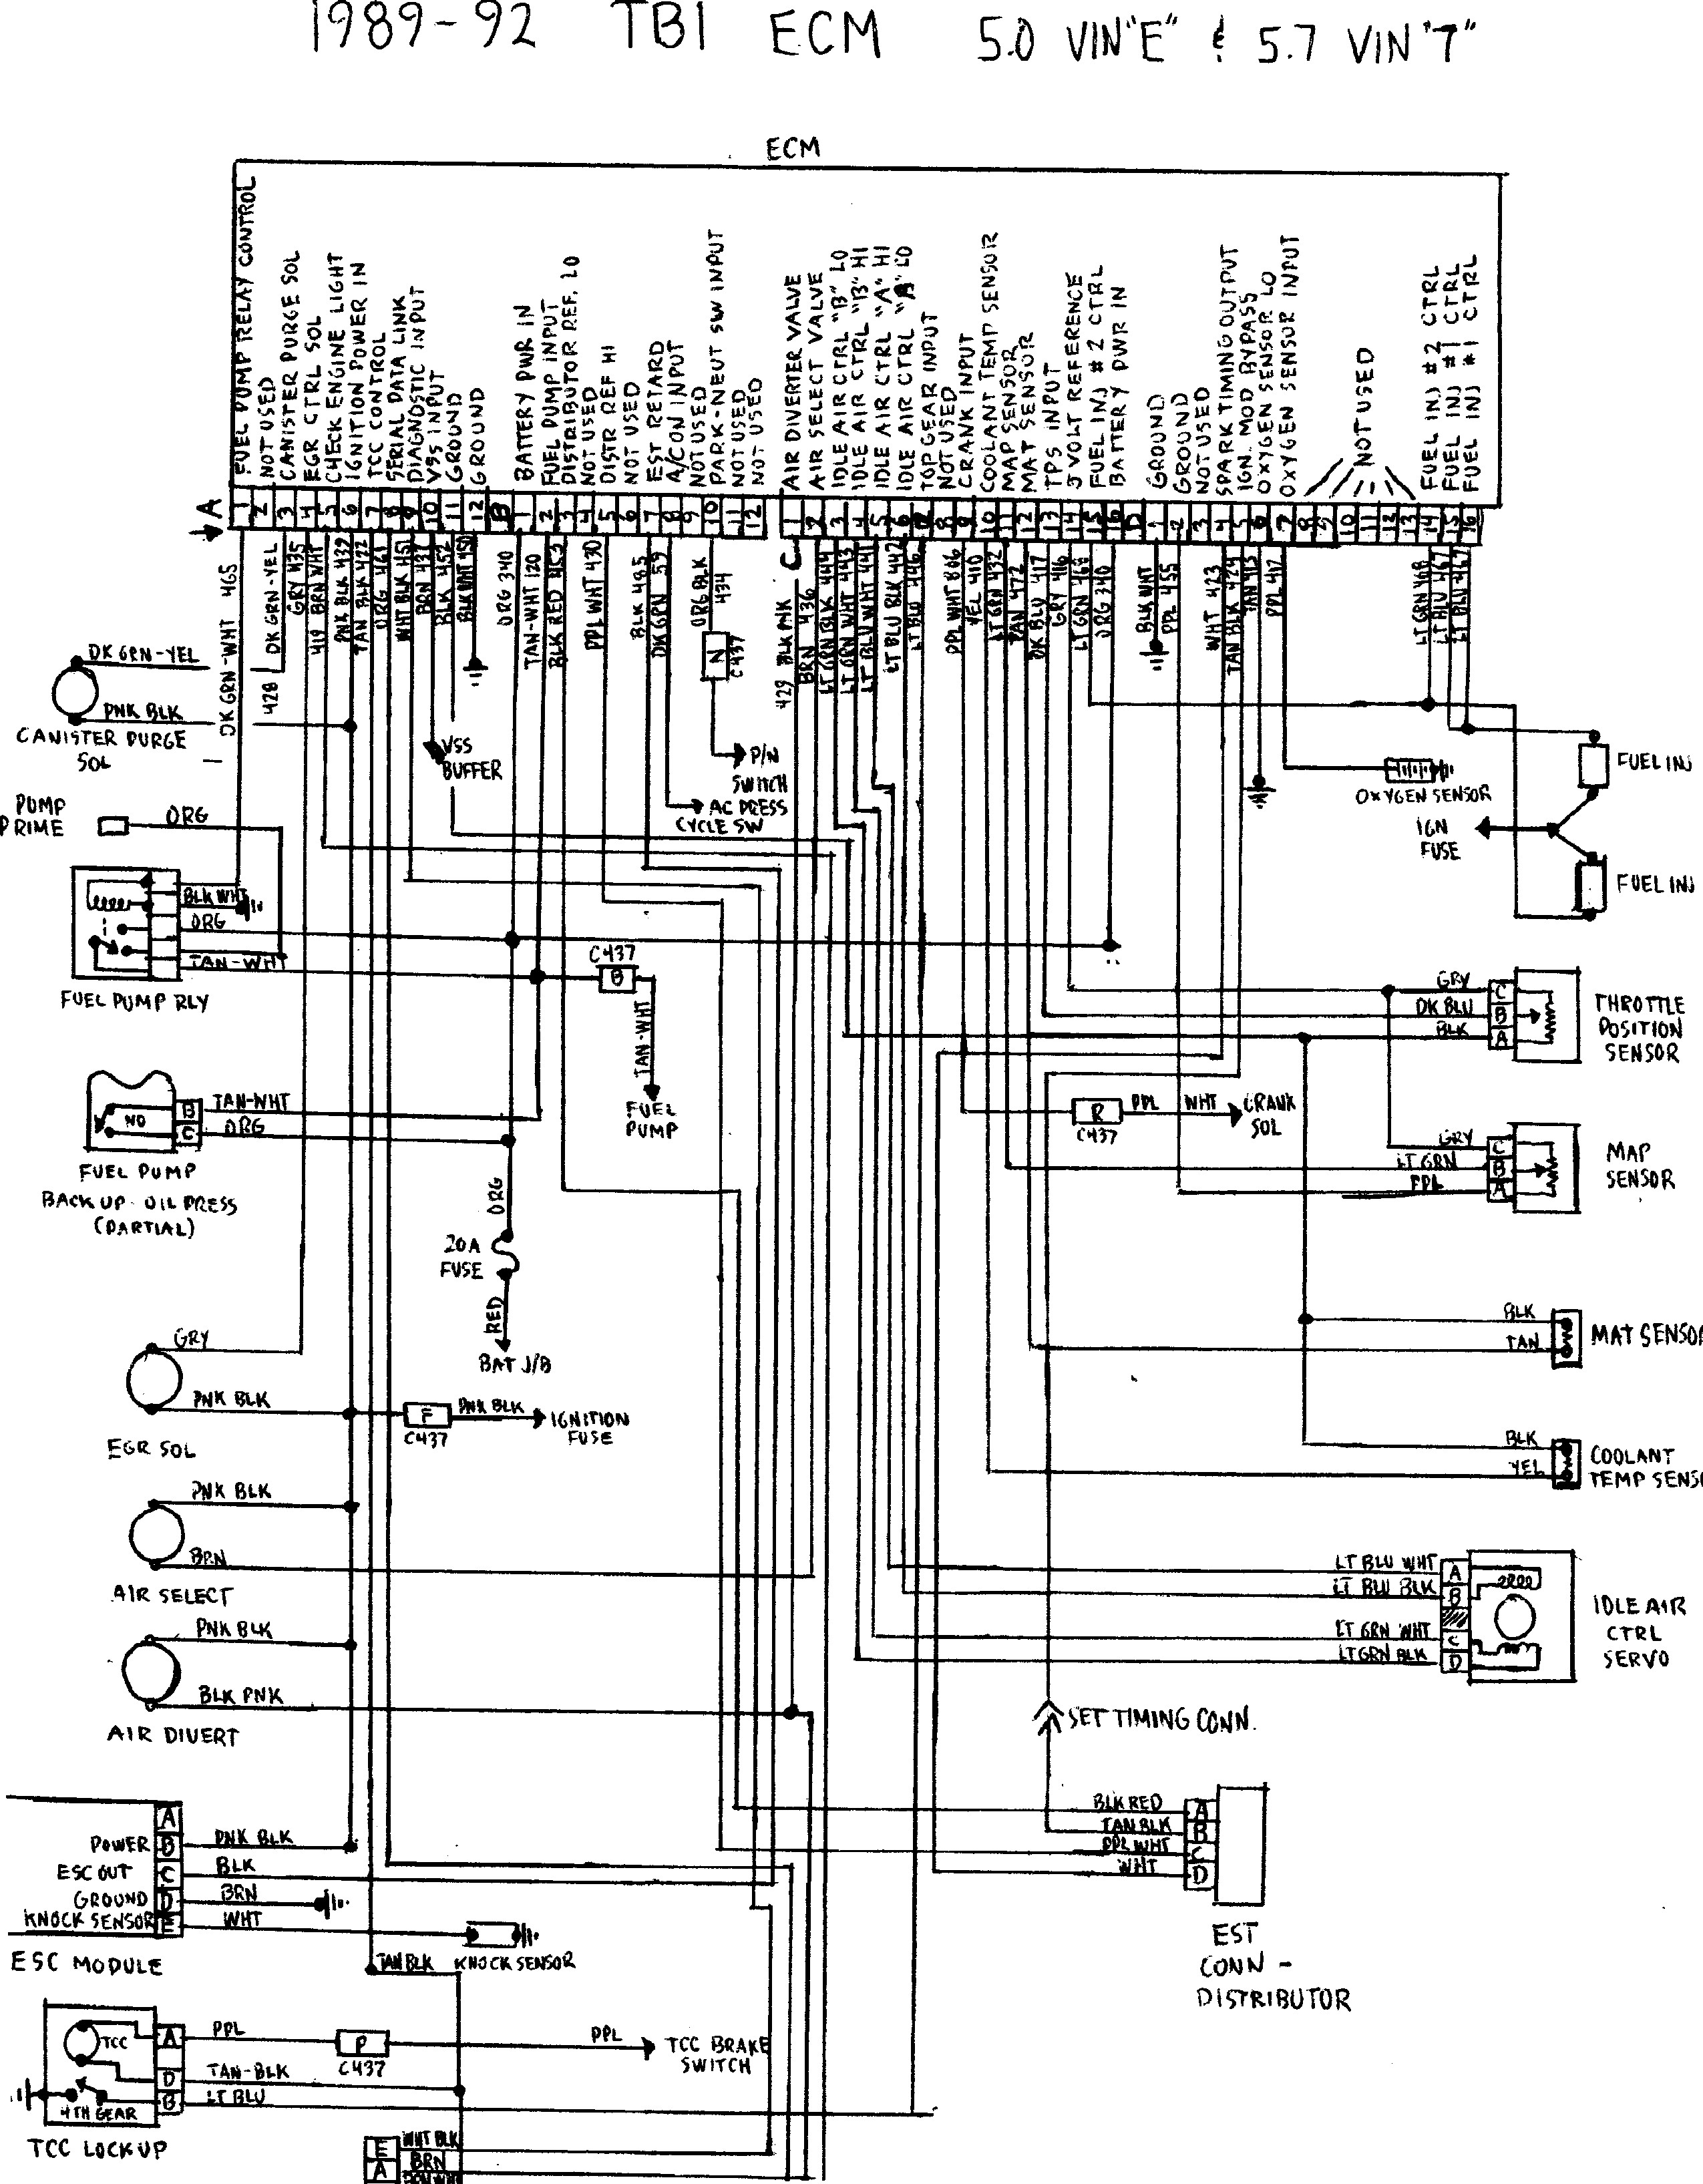 Chevy 454 Engine Diagram Gm Tbi Wiring Diagram Experts Wiring Diagram • Of Chevy 454 Engine Diagram